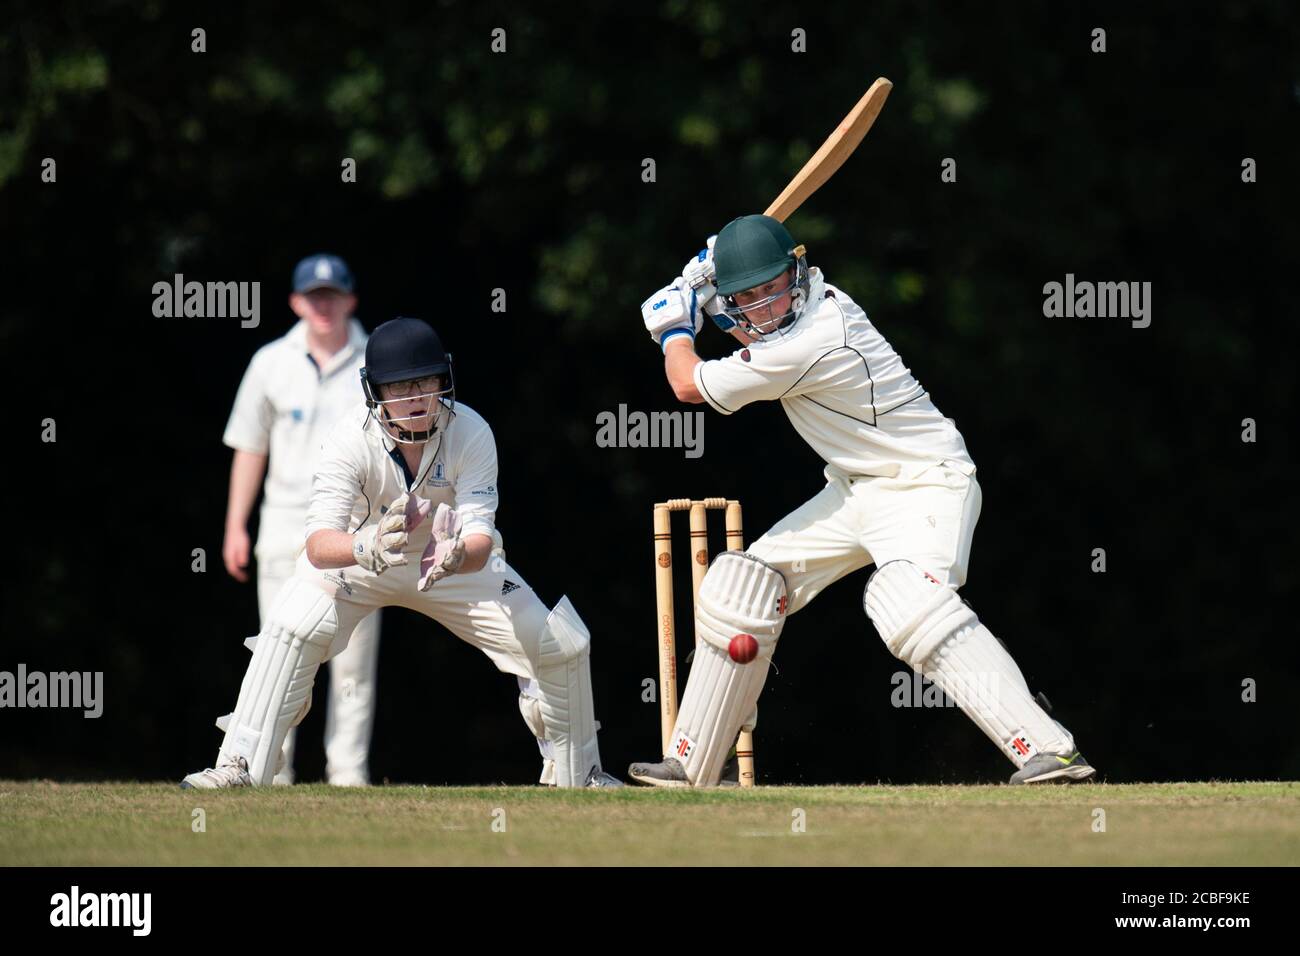 Batsman playing shot. Stock Photo